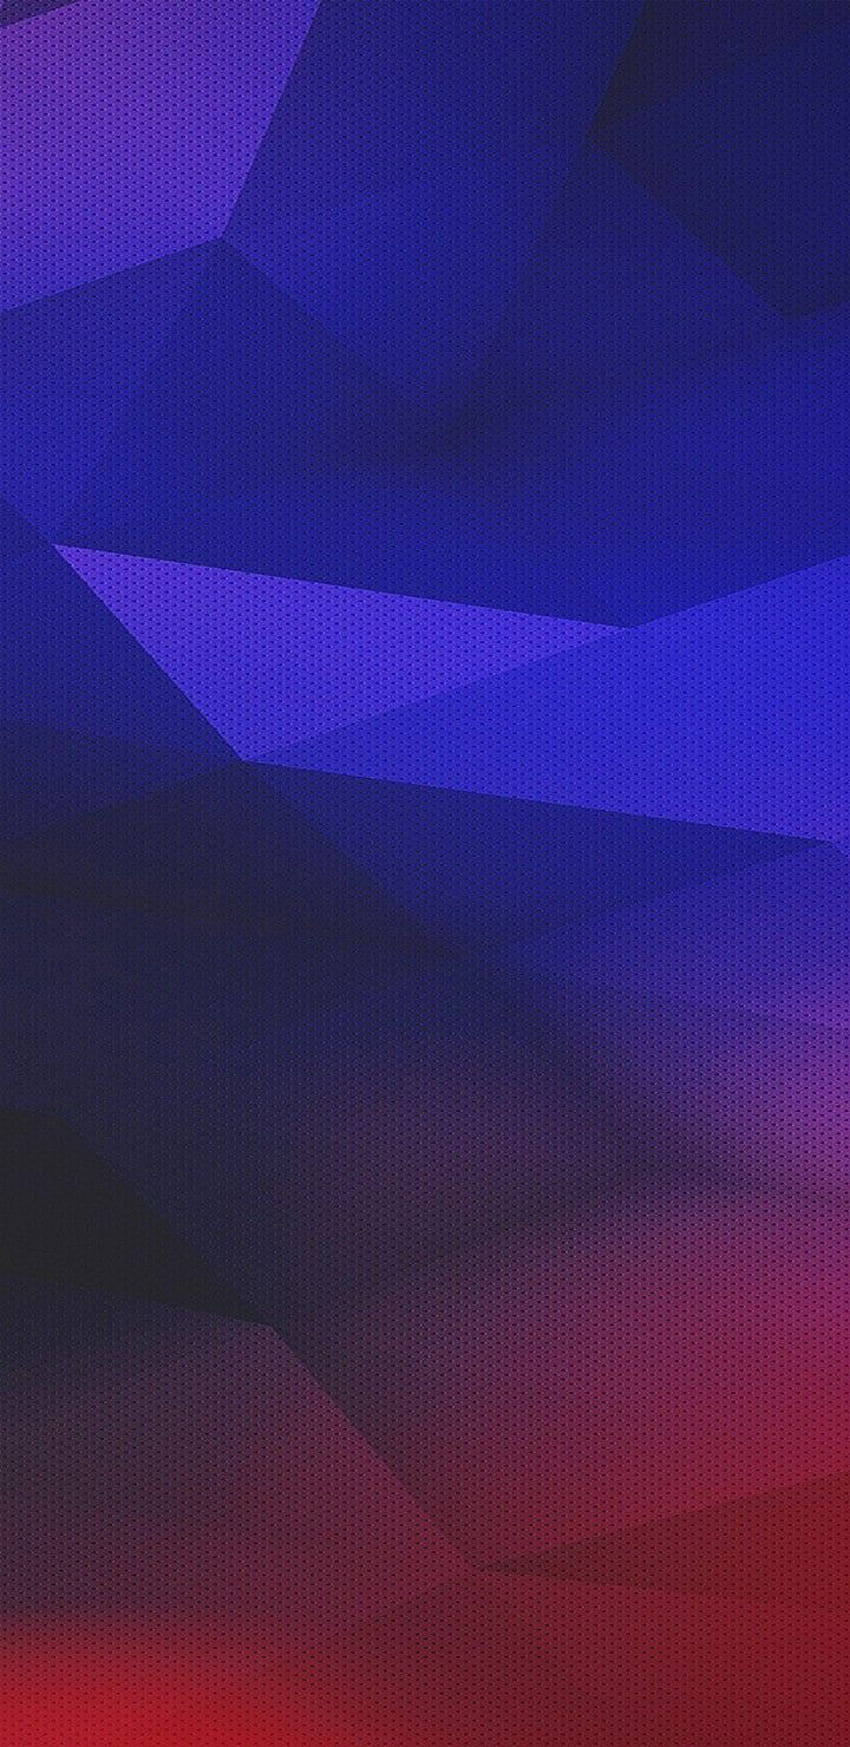 iOS 11, iPhone X, púrpura, azul, rojo, textura, limpio, simple, abstracto, manzana, iphone 8, limpio,…, teléfono azul rojo fondo de pantalla del teléfono